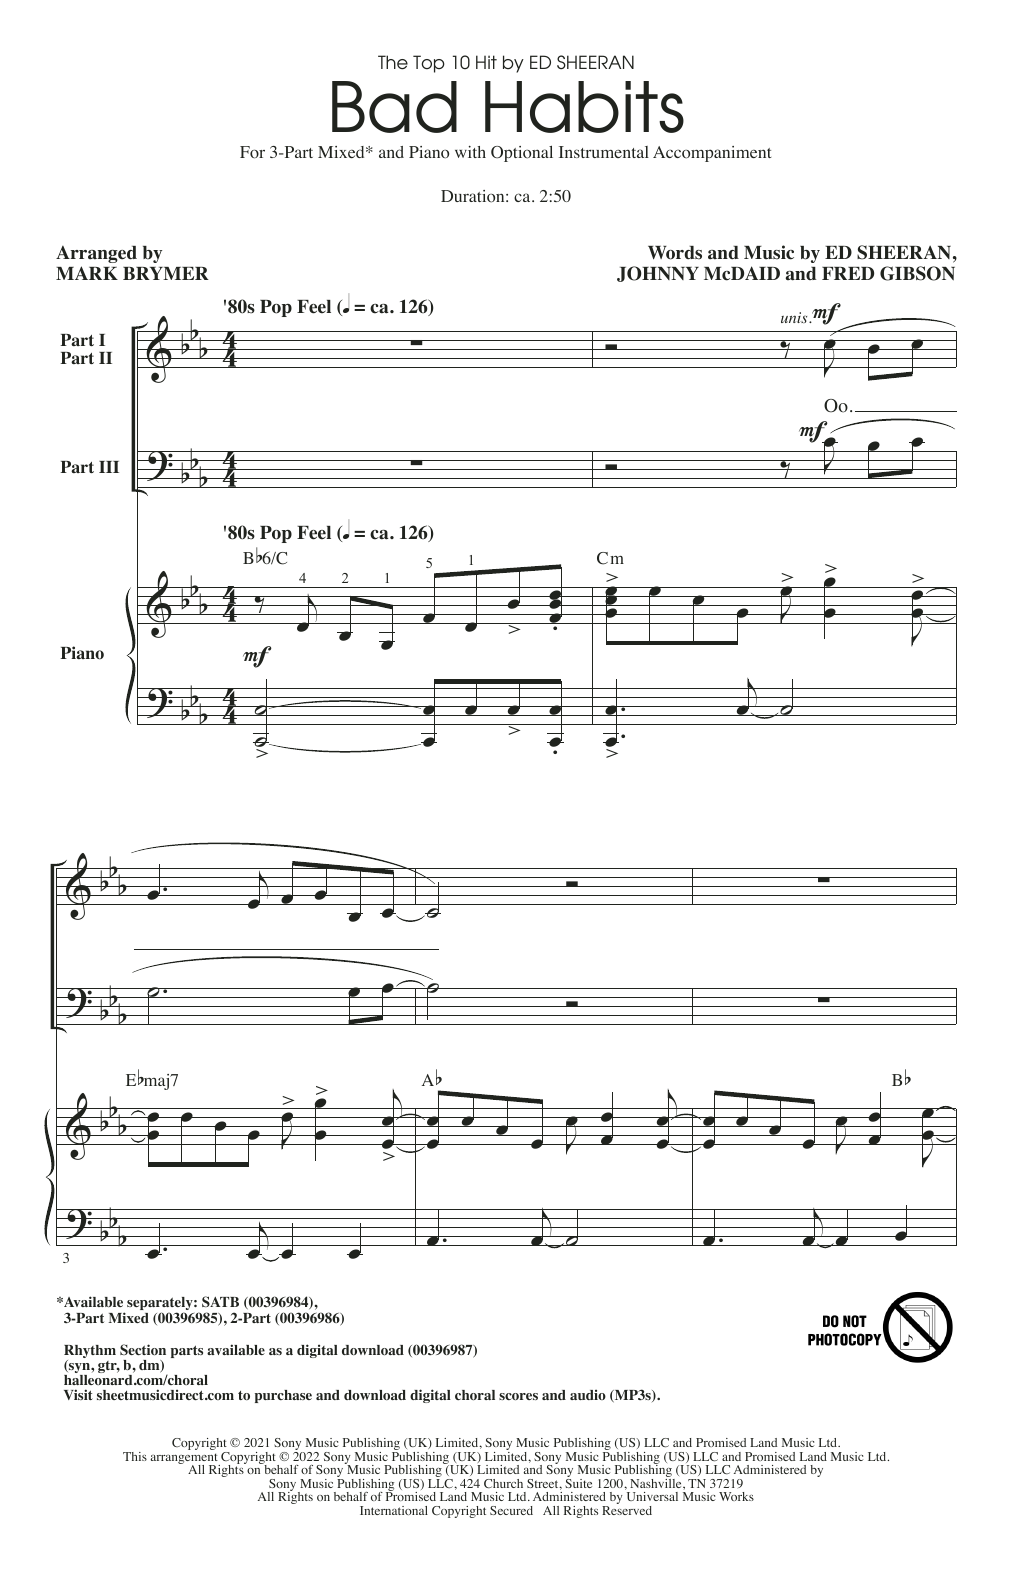 Ed Sheeran Bad Habits (arr. Mark Brymer) Sheet Music Notes & Chords for 2-Part Choir - Download or Print PDF